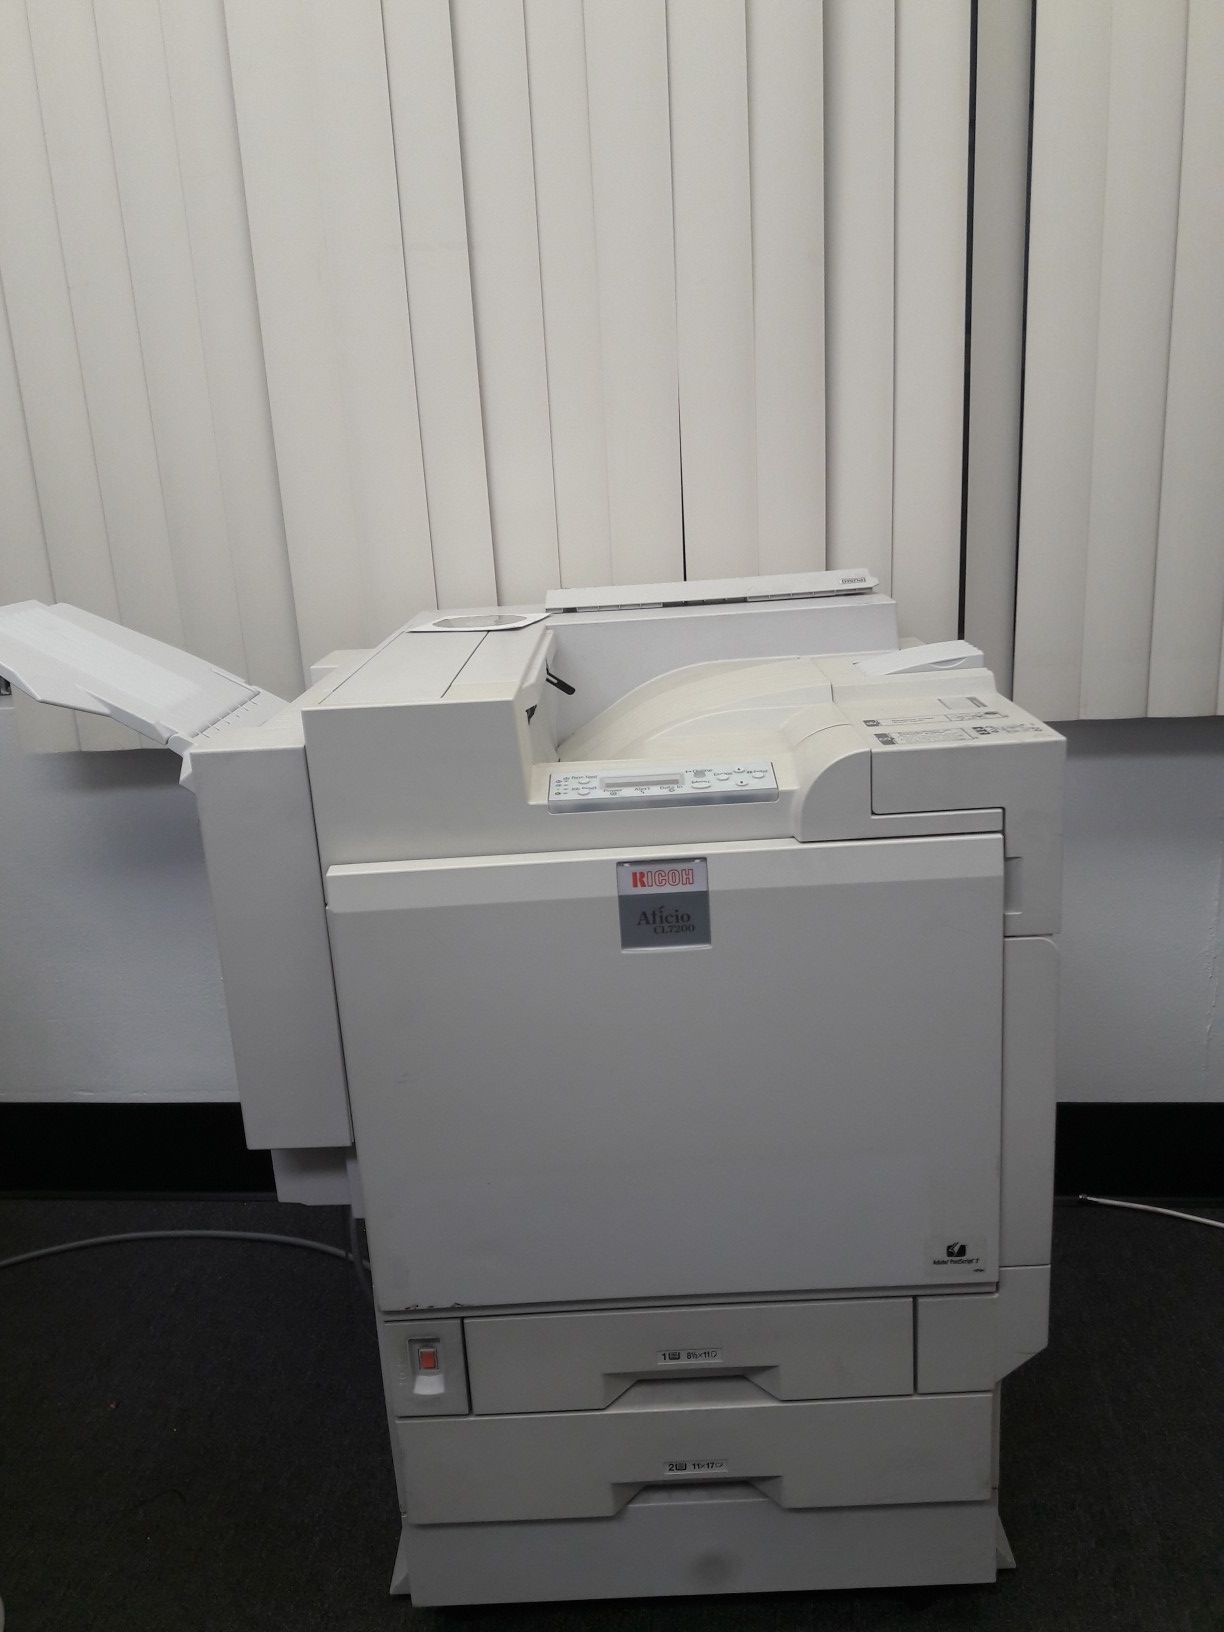 Printer. Professional. Ricoh Aficio CL7200 Color Laser